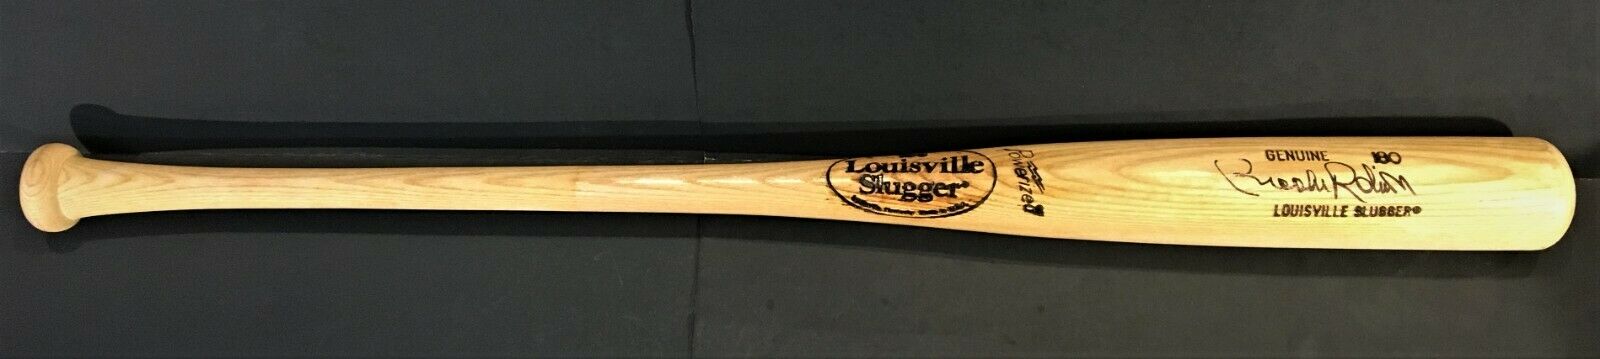 Brooks Robinson Hof, Autographed Louisville Slugger Baseball Bat, 18x As, 16x Gg